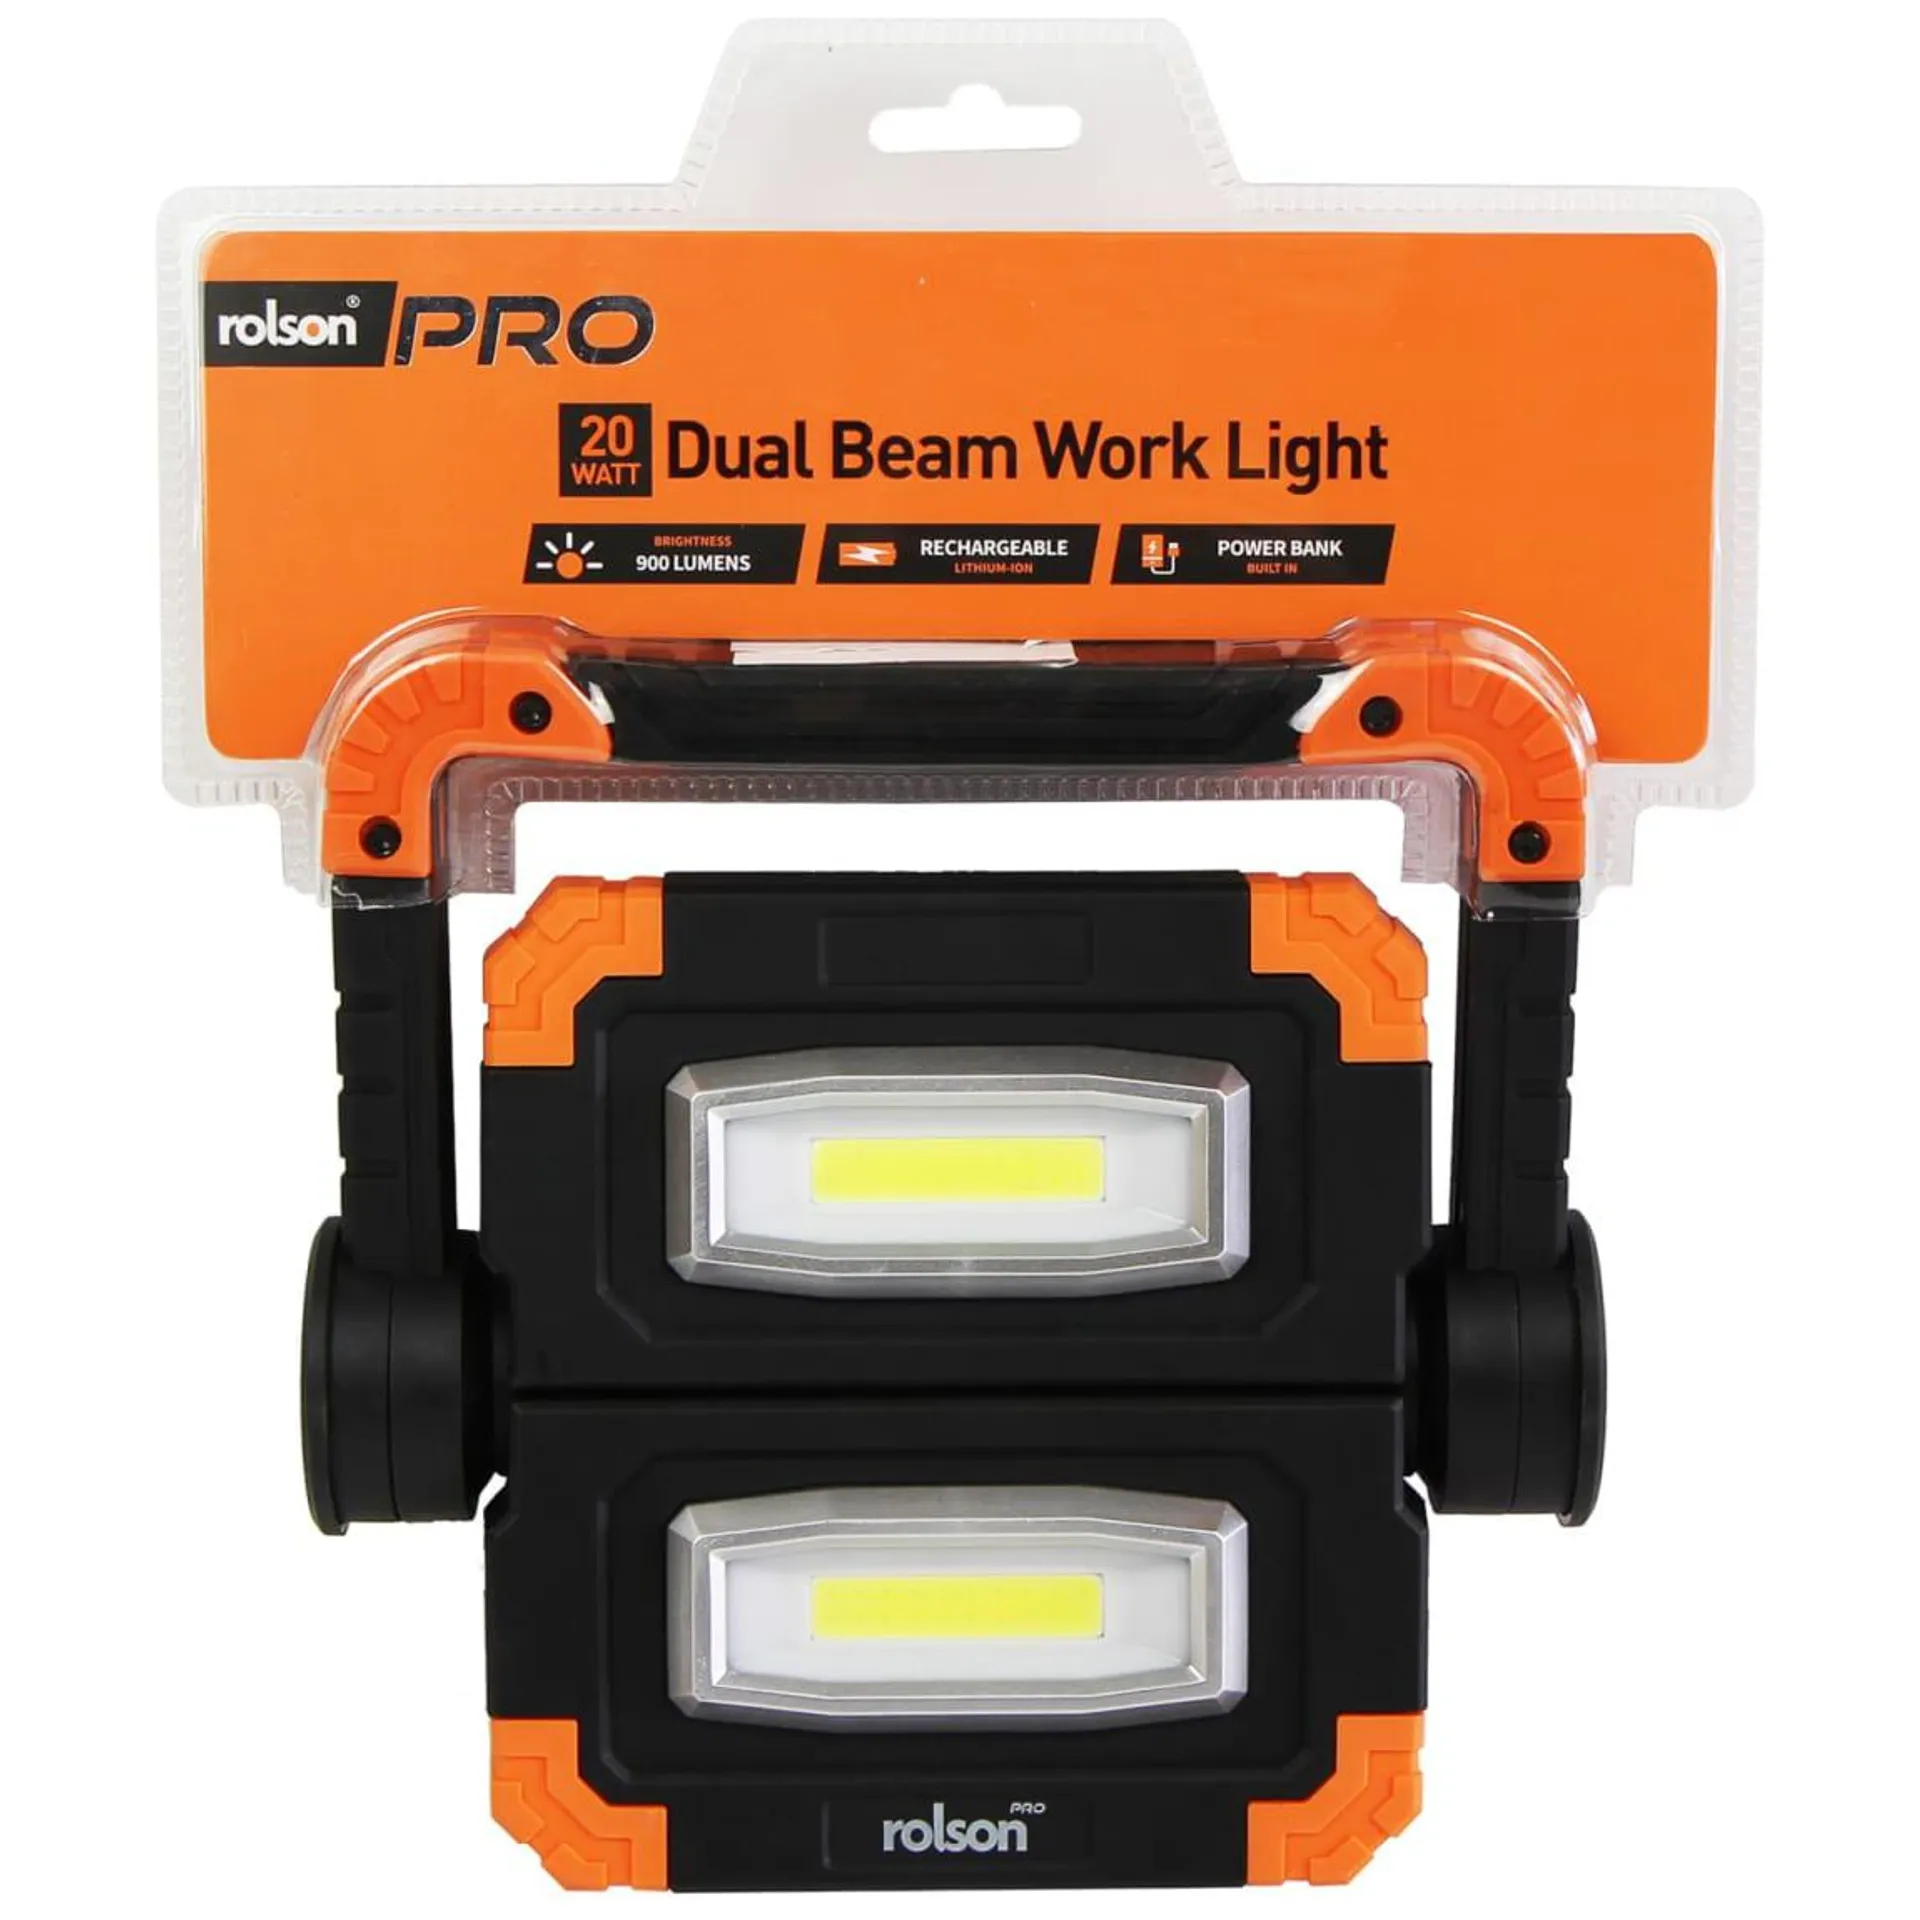 Rolson Pro Dual Beam Work Light